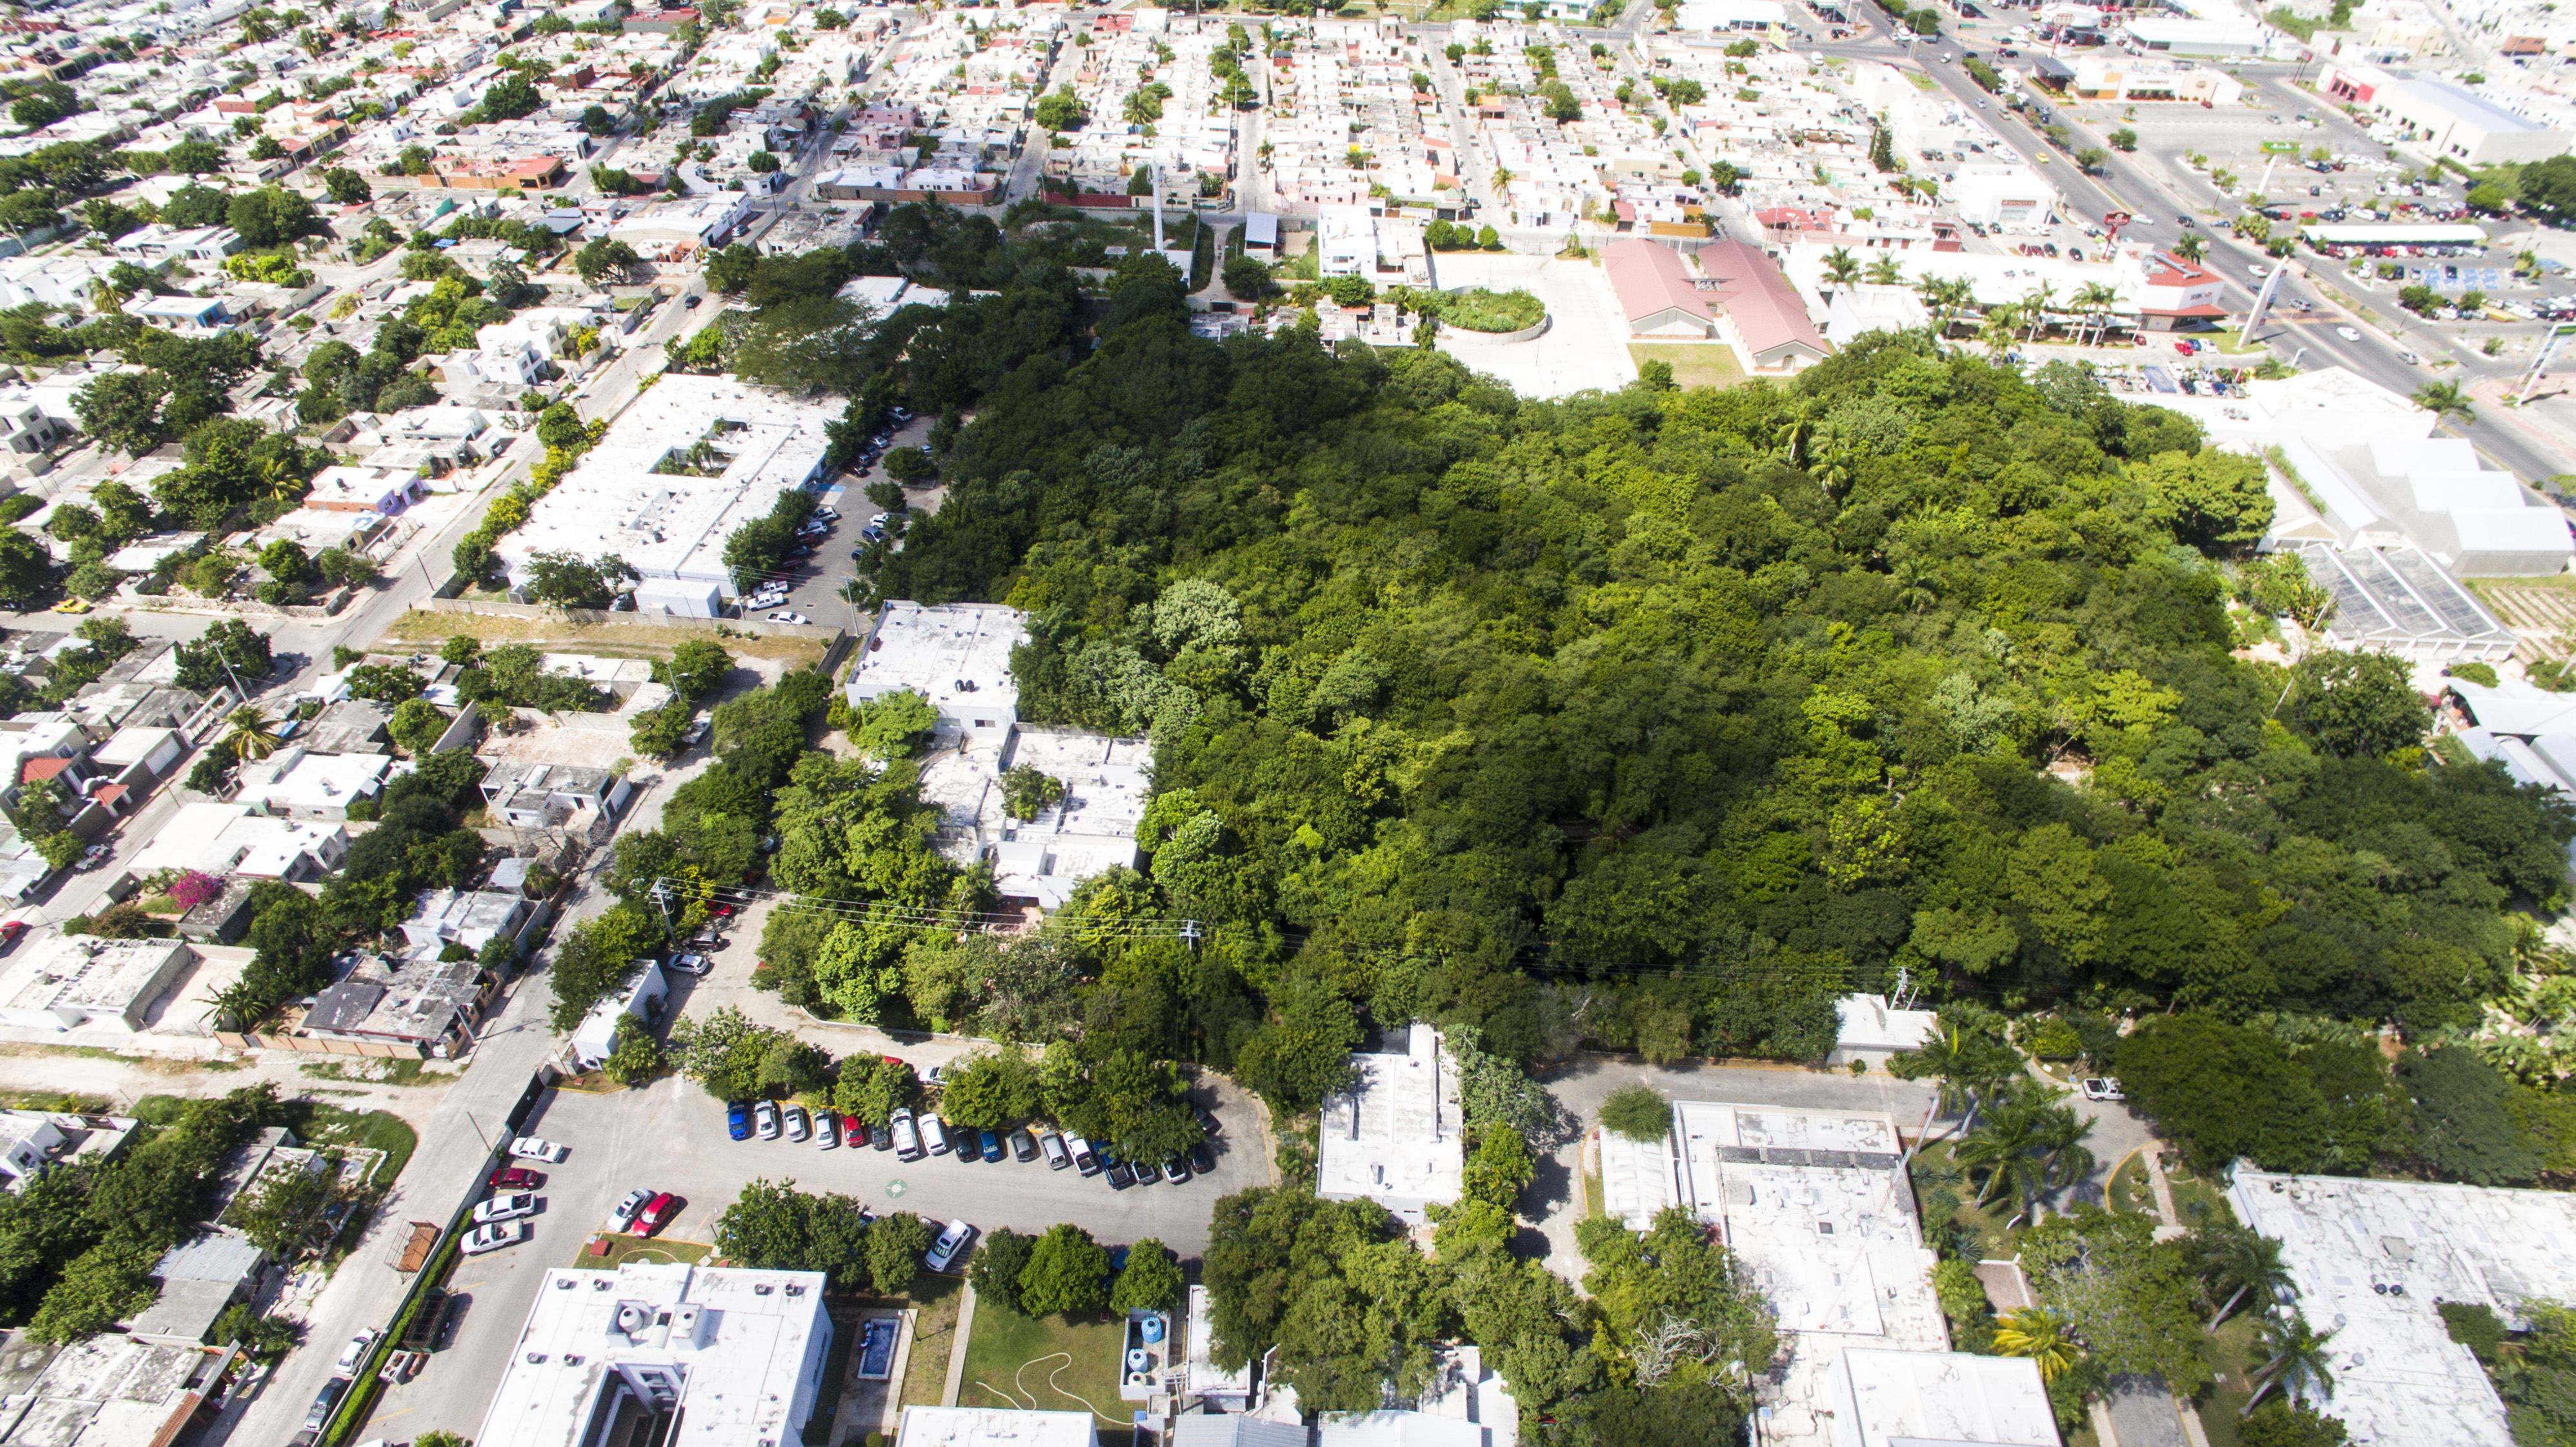 The Regional Botanical Garden “Roger Orellana” of the Scientific Research Center of Yucatán